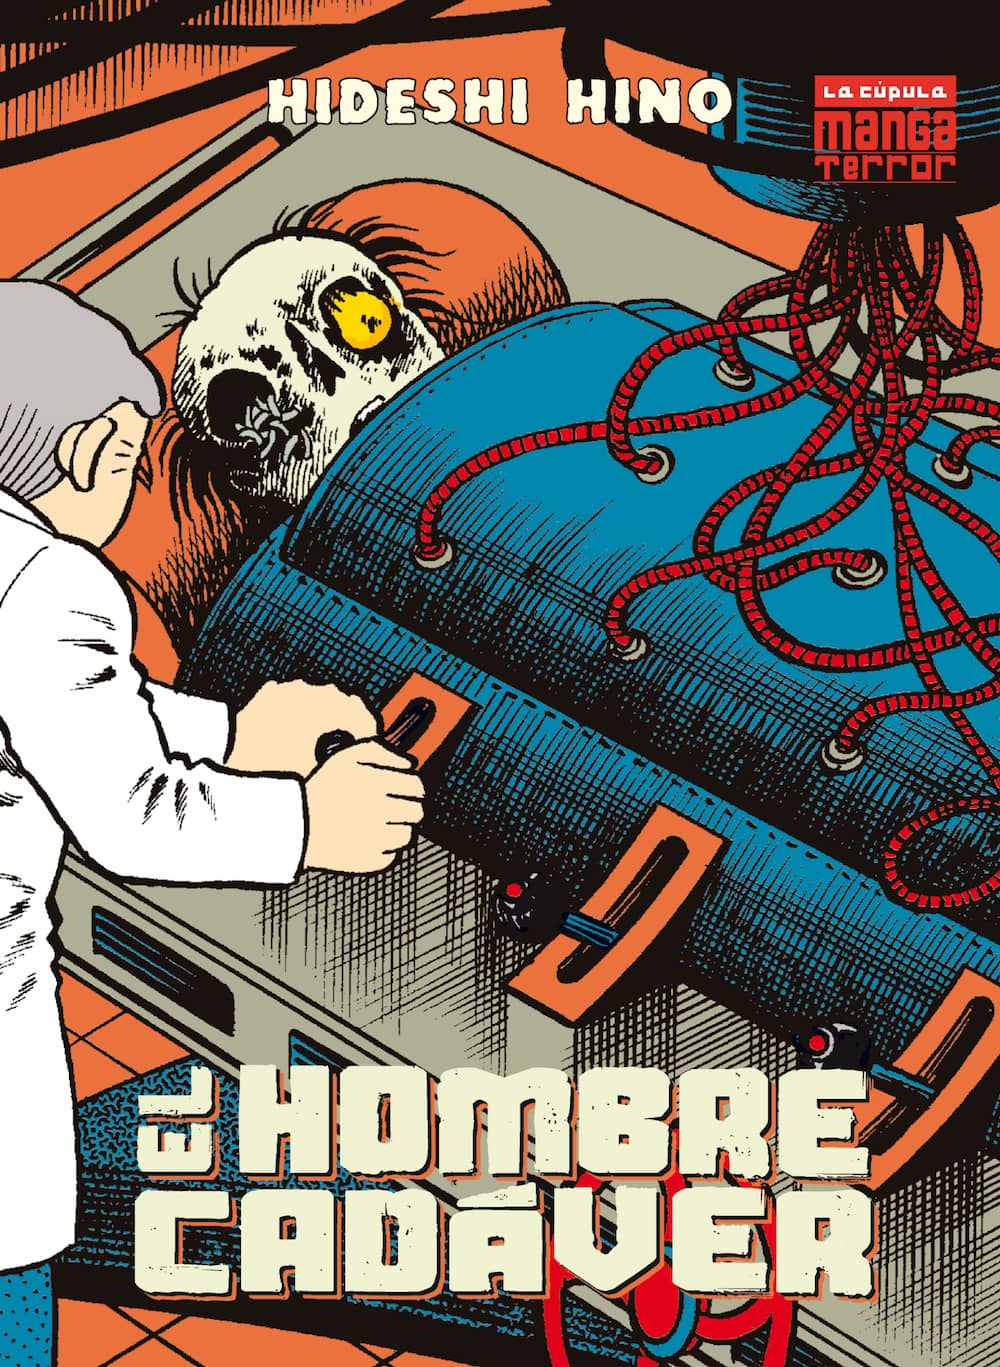 EL HOMBRE CADAVER (2a EDICION)